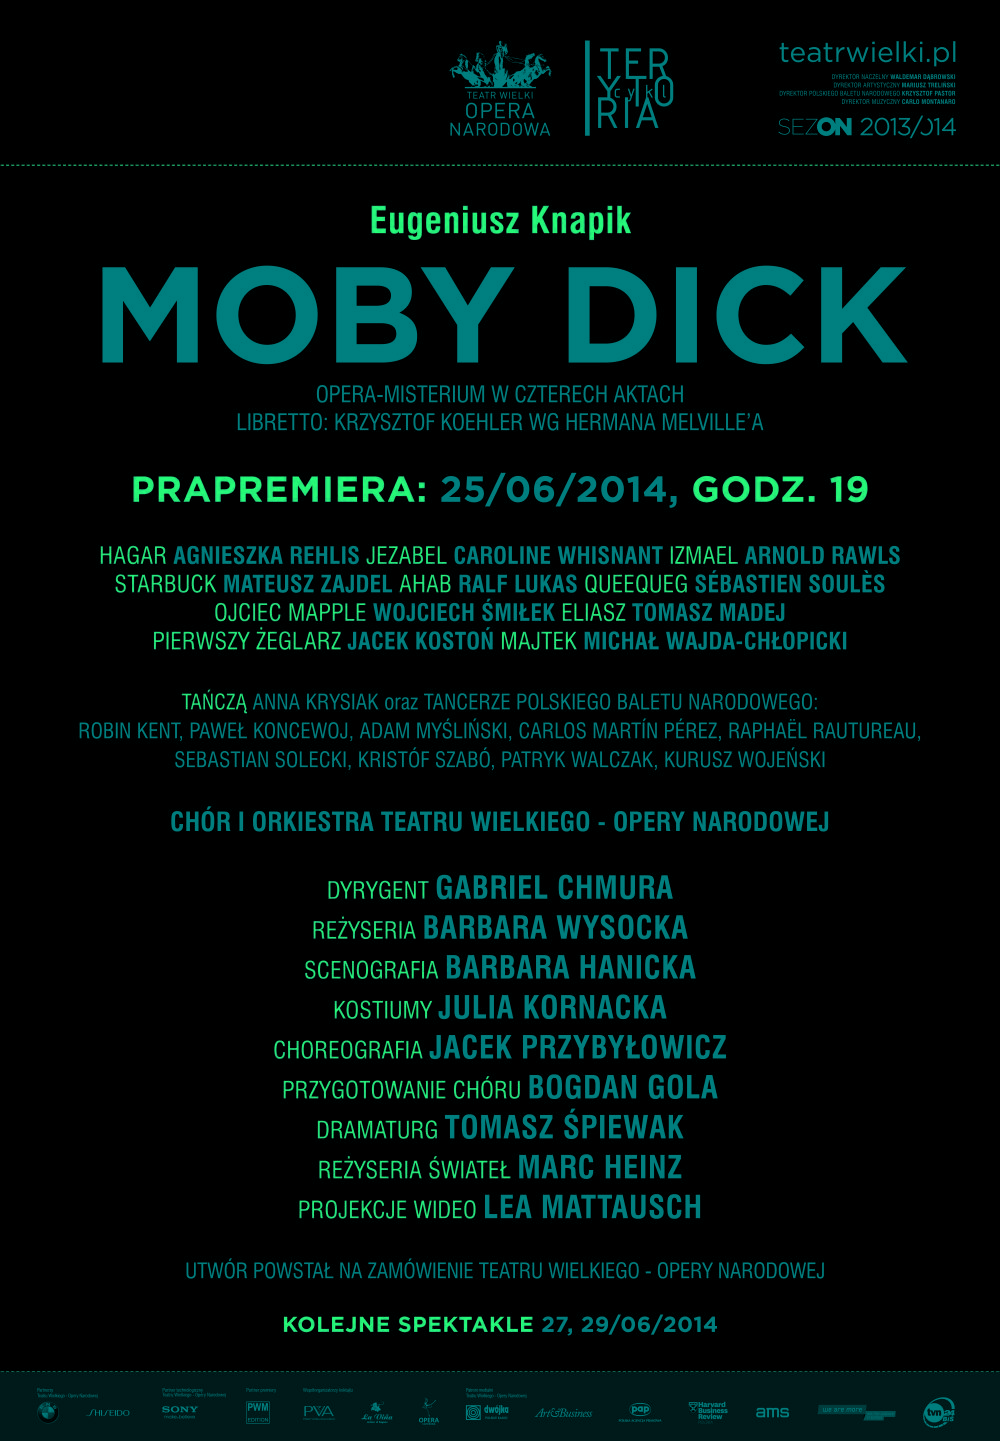 Afisz „Moby Dick” Eugeniusz Knapik prapremiera 2014-06-25